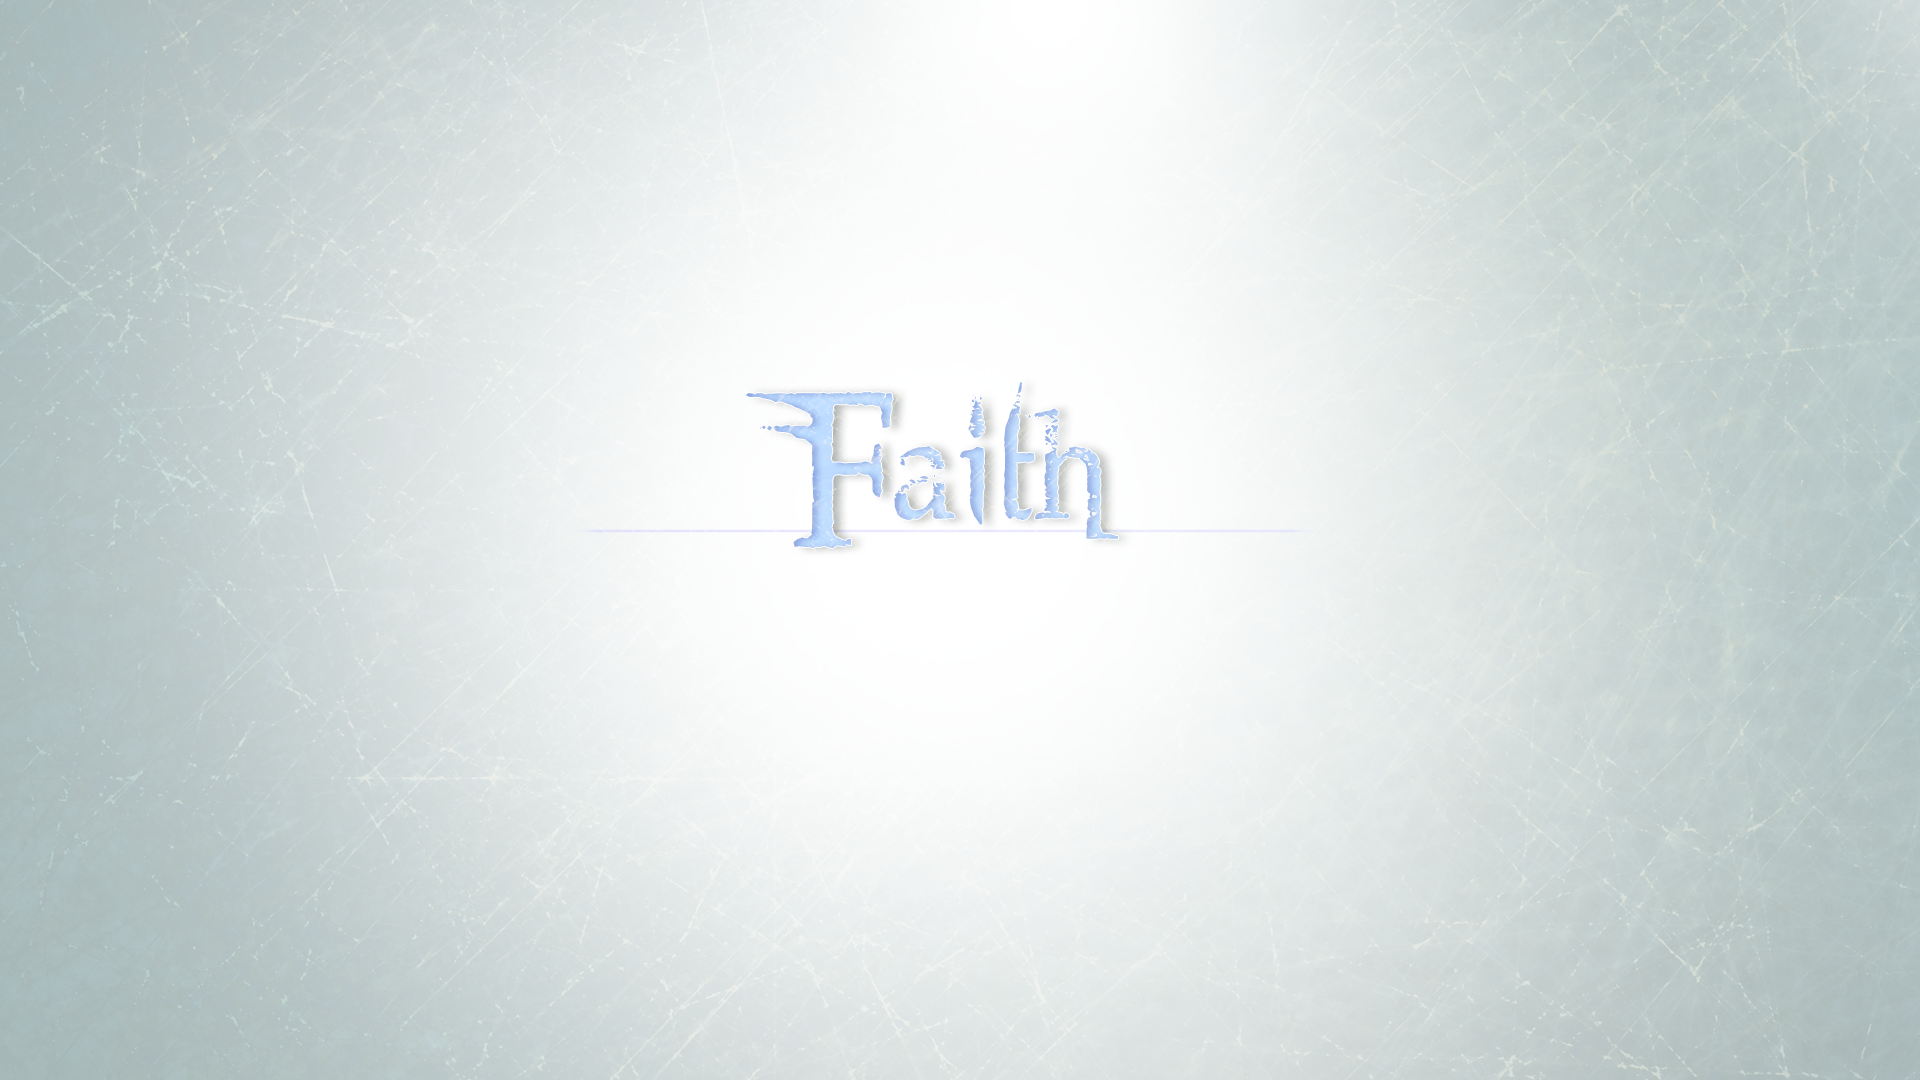 Faith Wallpaper by TemptationDK on DeviantArt